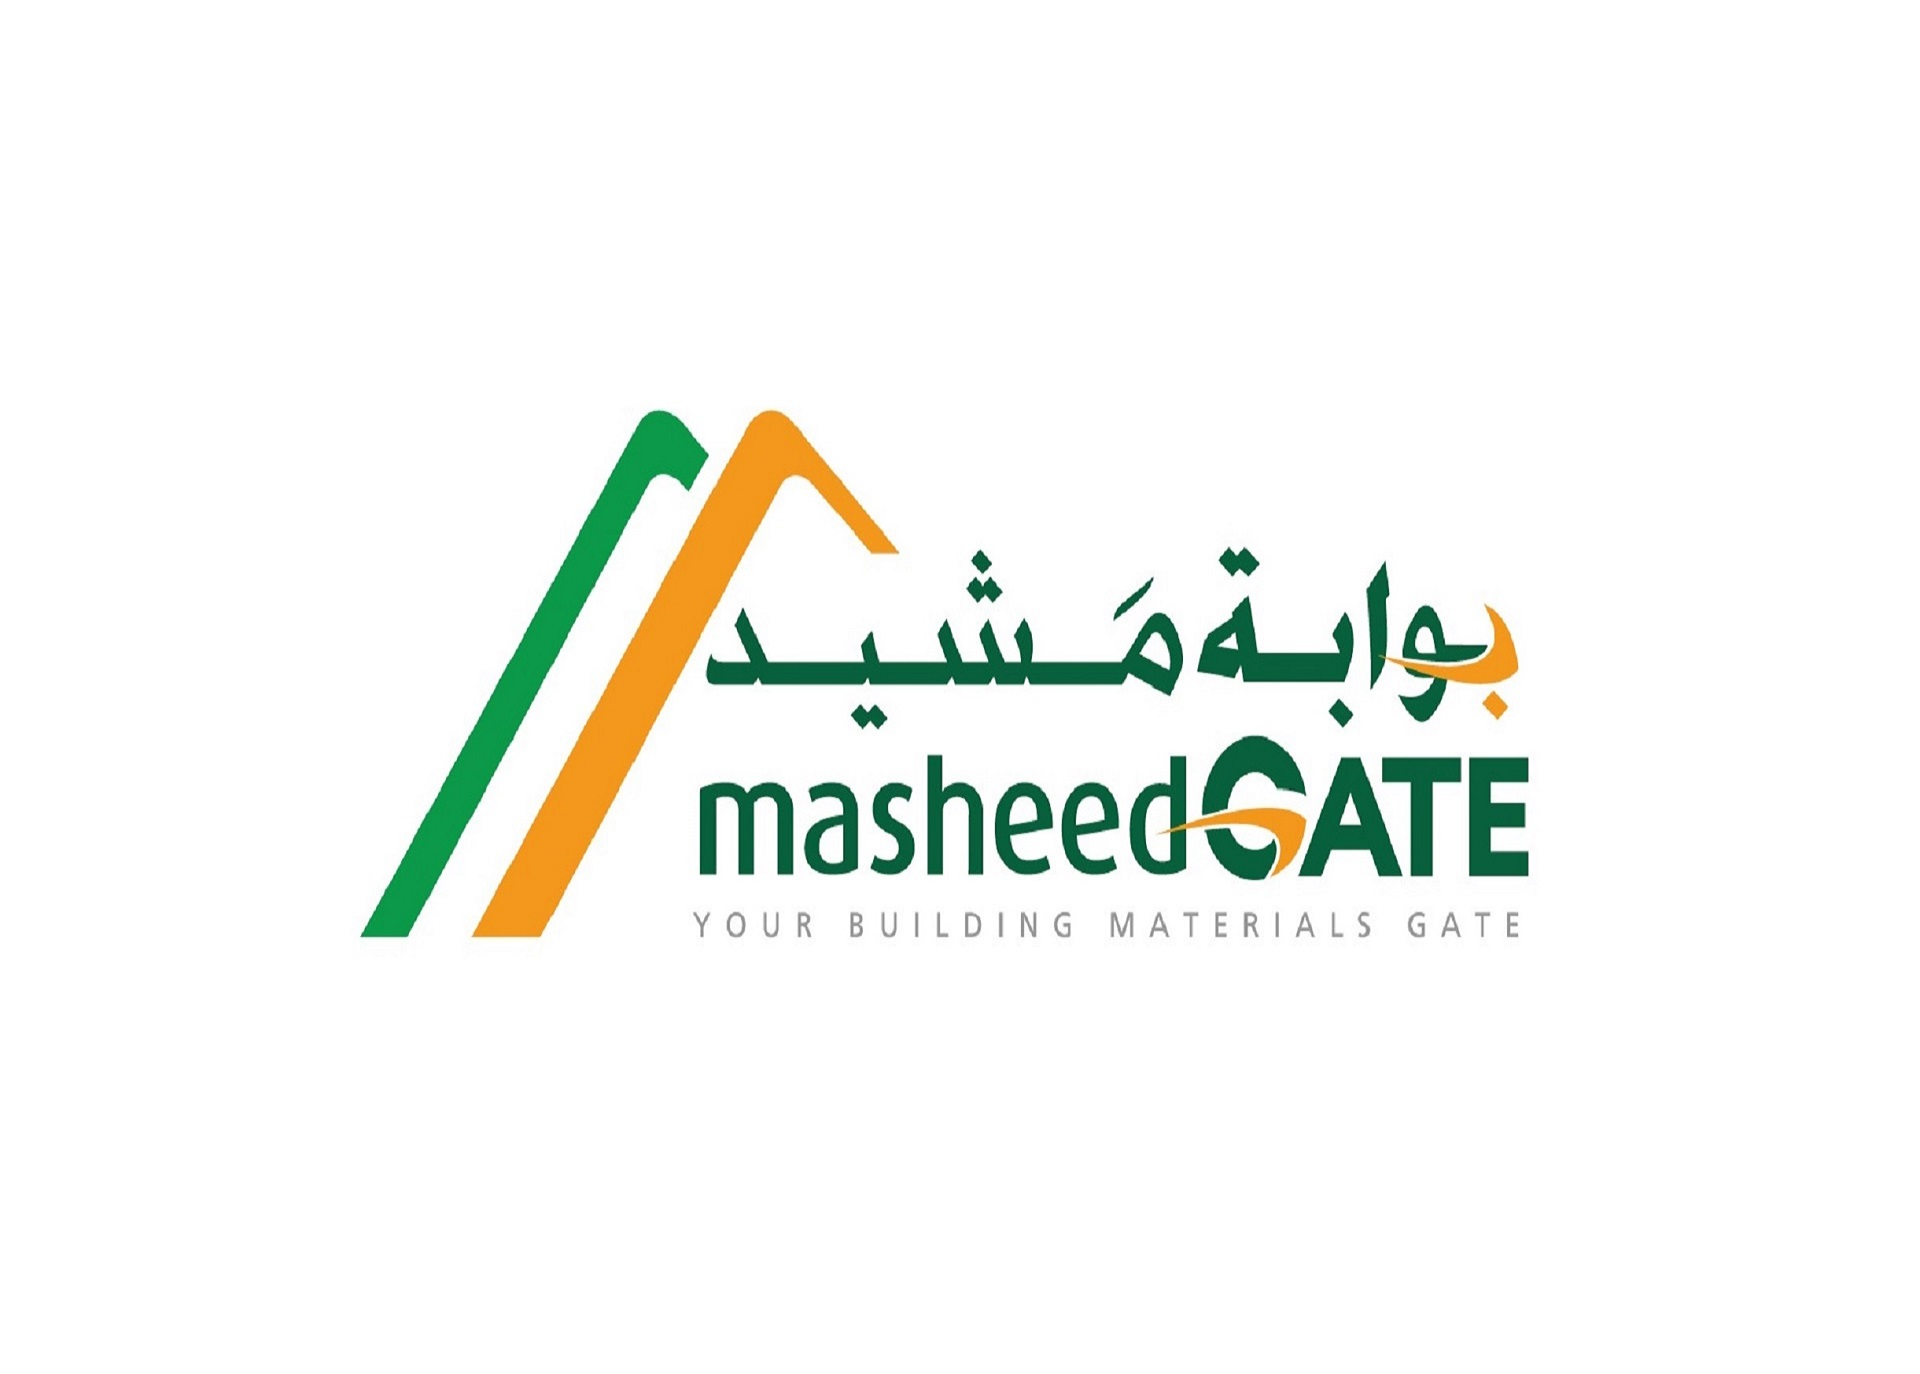 masheed launch the onling selling platform "masheedGATE"